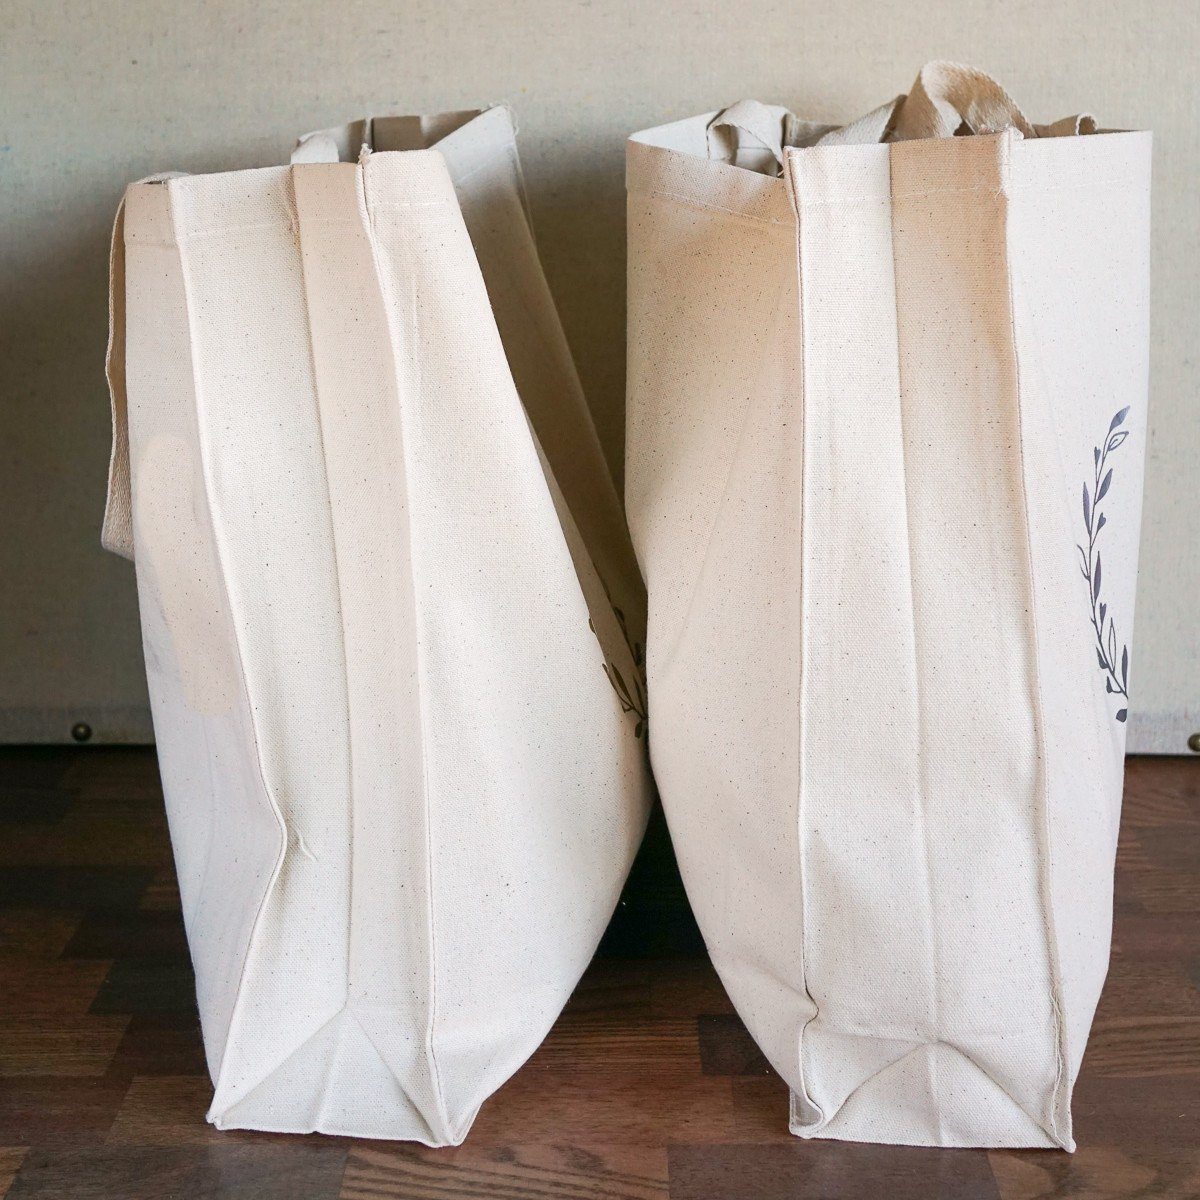 Monogrammed Tote Bags - LaLa Confetti